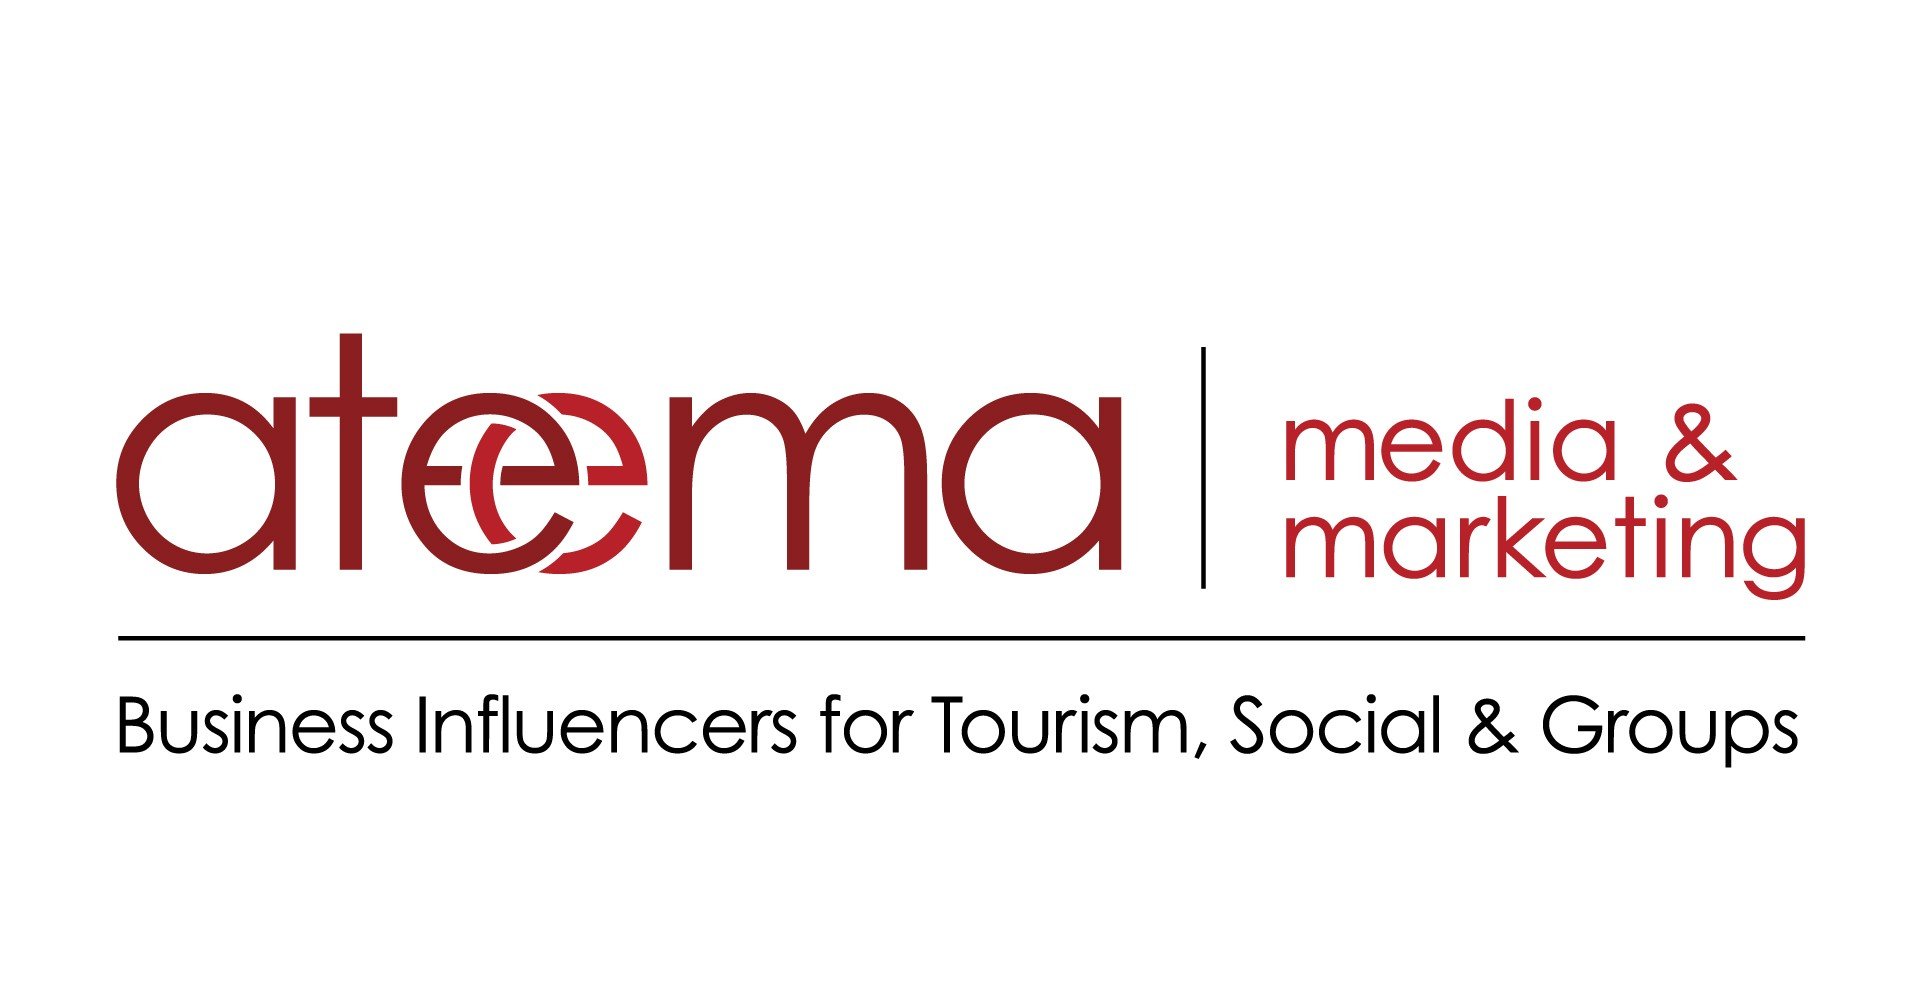 ateema_media_marketing_cover.jpg